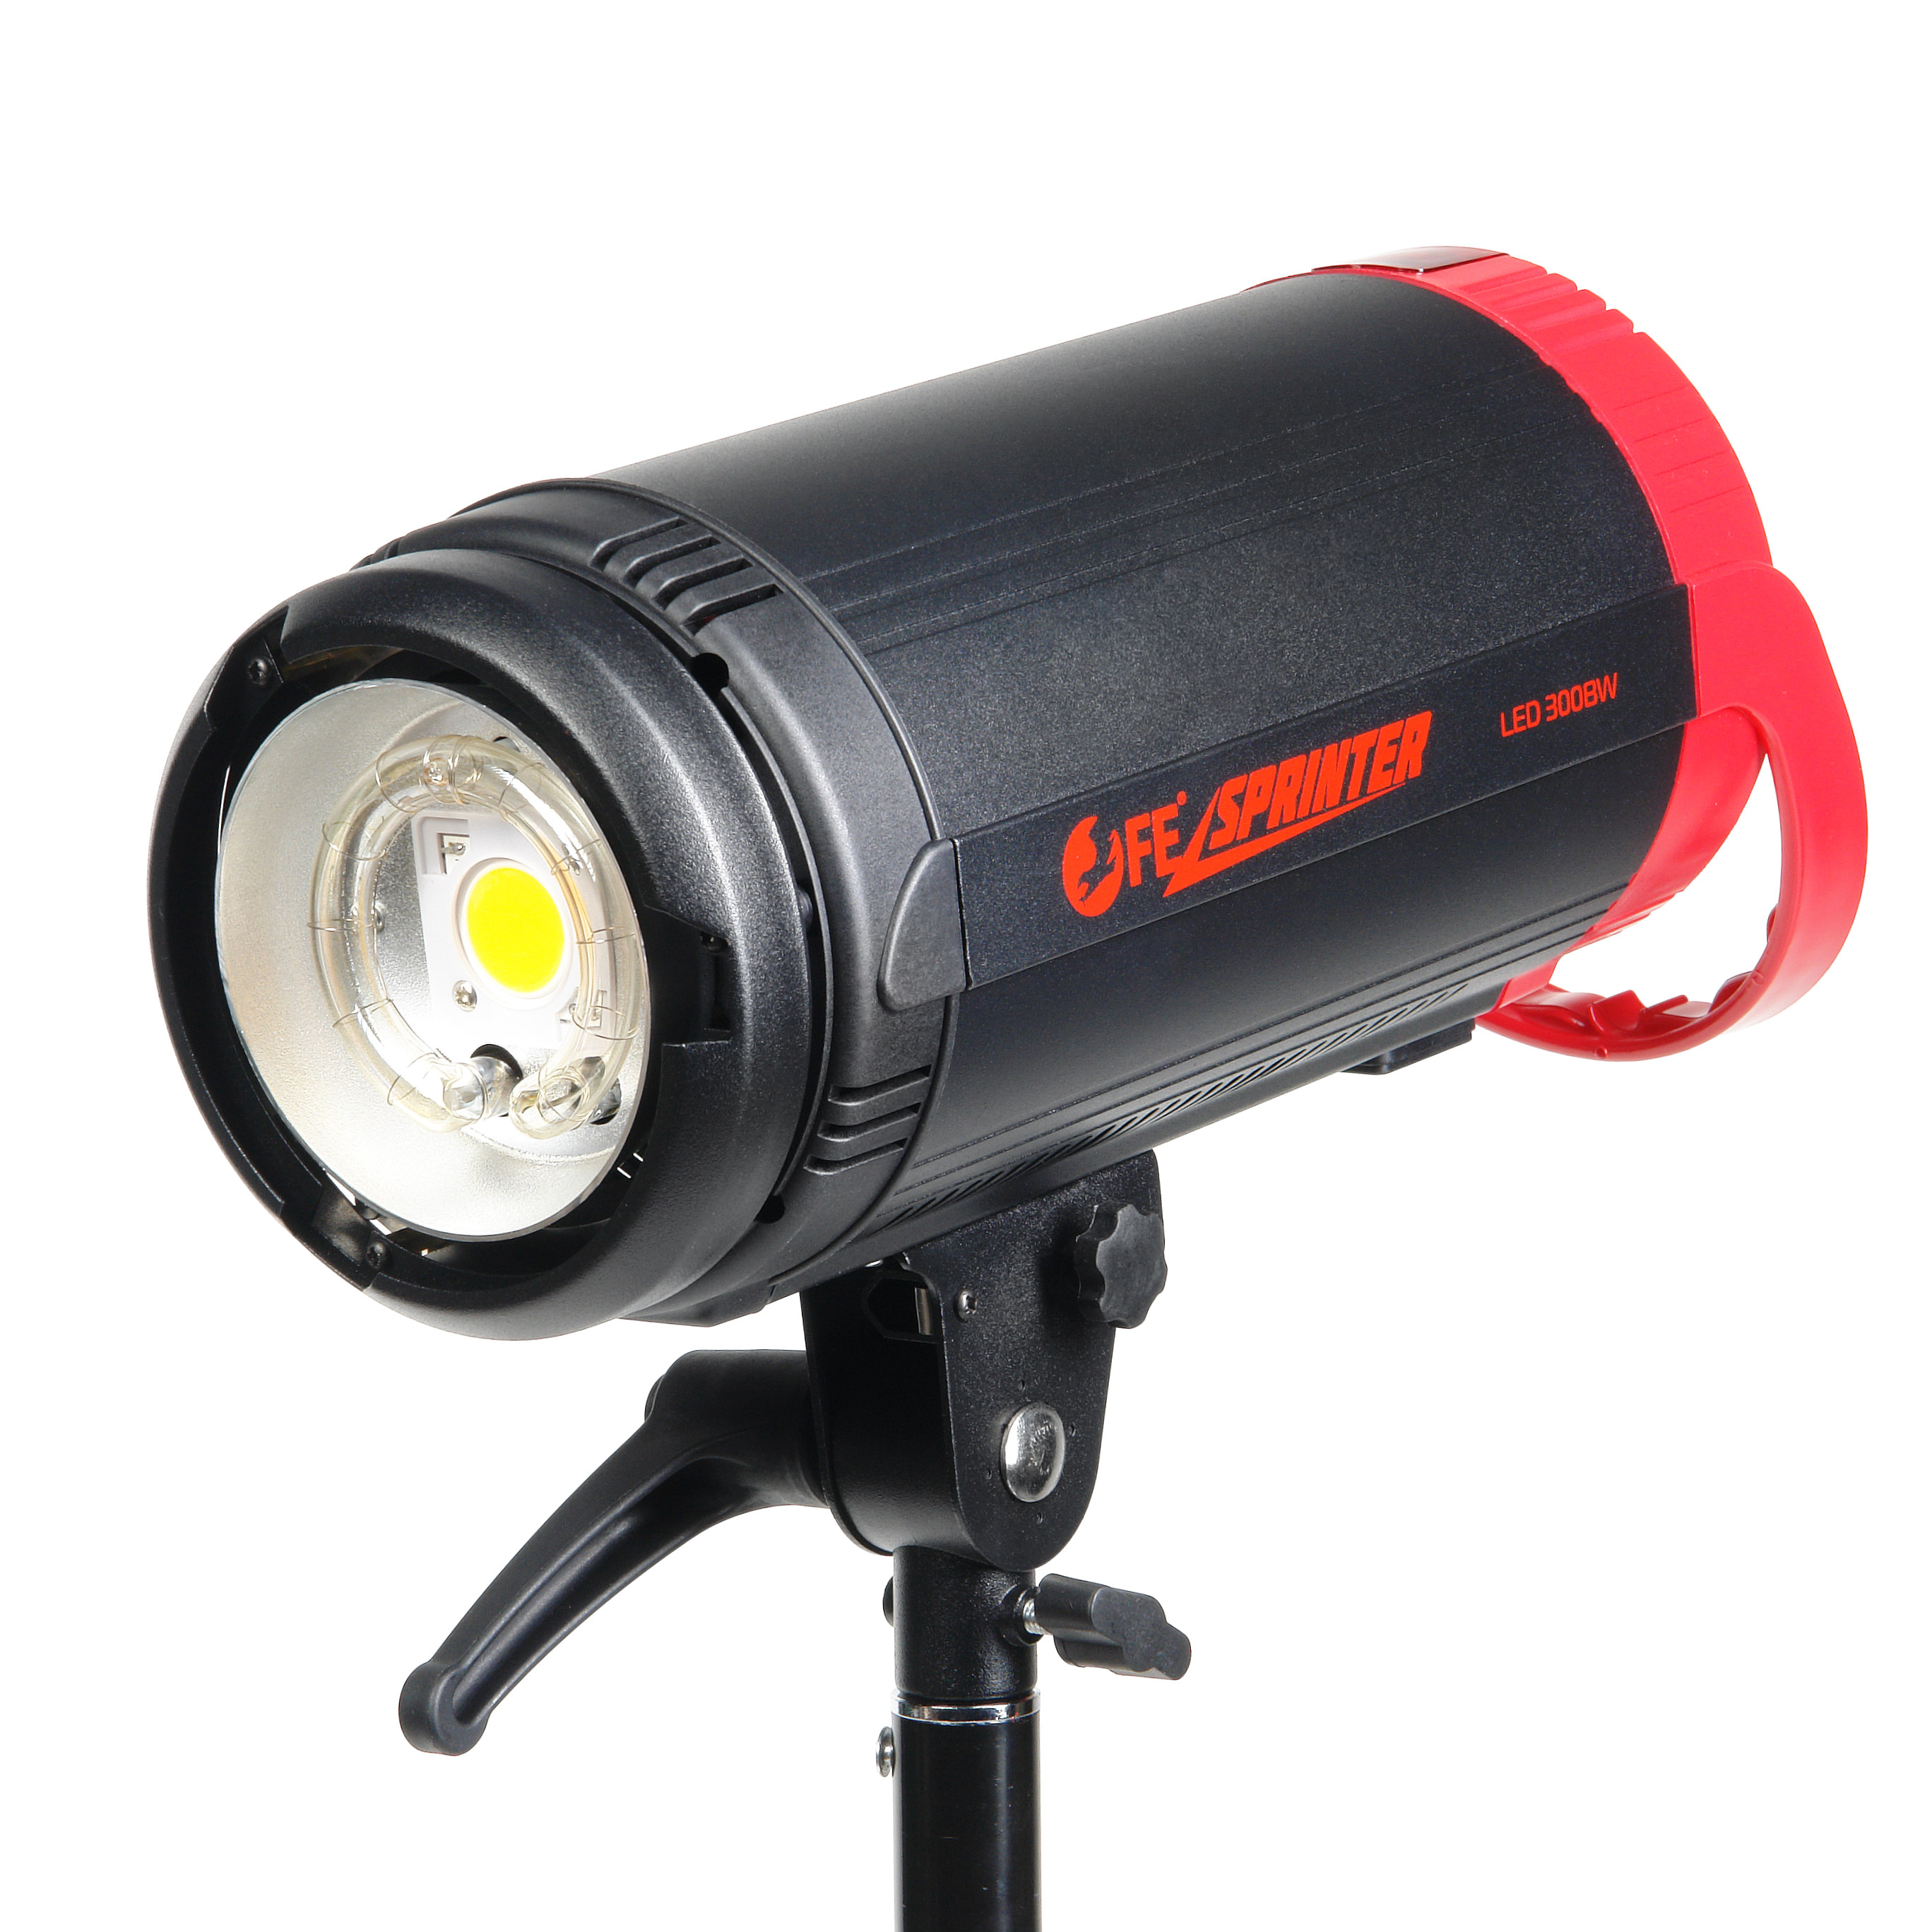     Falcon Eyes Sprinter LED 3300-SBU Kit   Ultra-mart